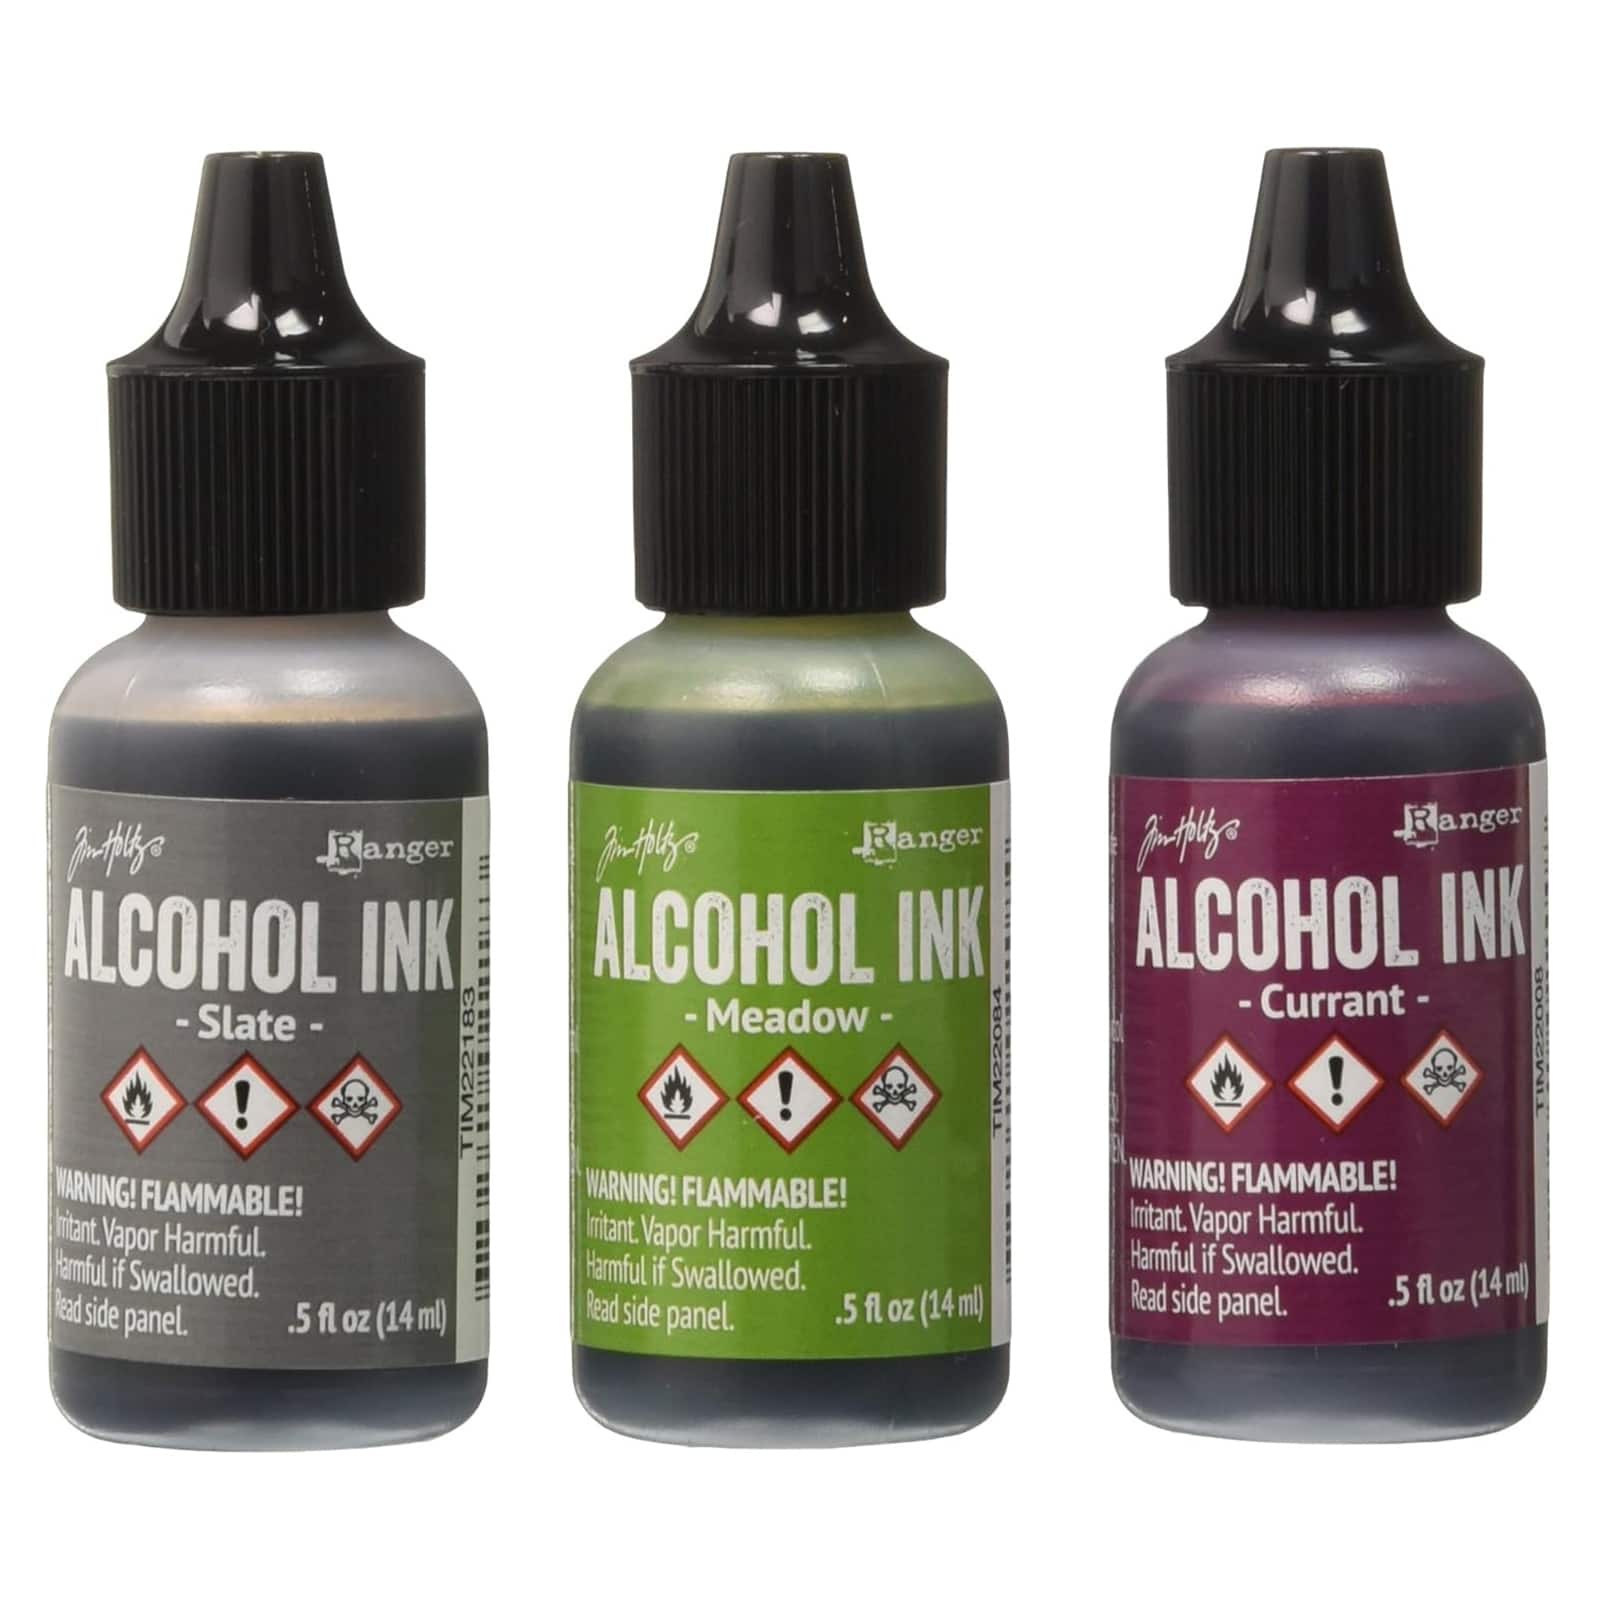 Pixiss Gemstone Alcohol Inks Set, 5 Highly Saturated Gemstone Alcohol Inks  for Resin